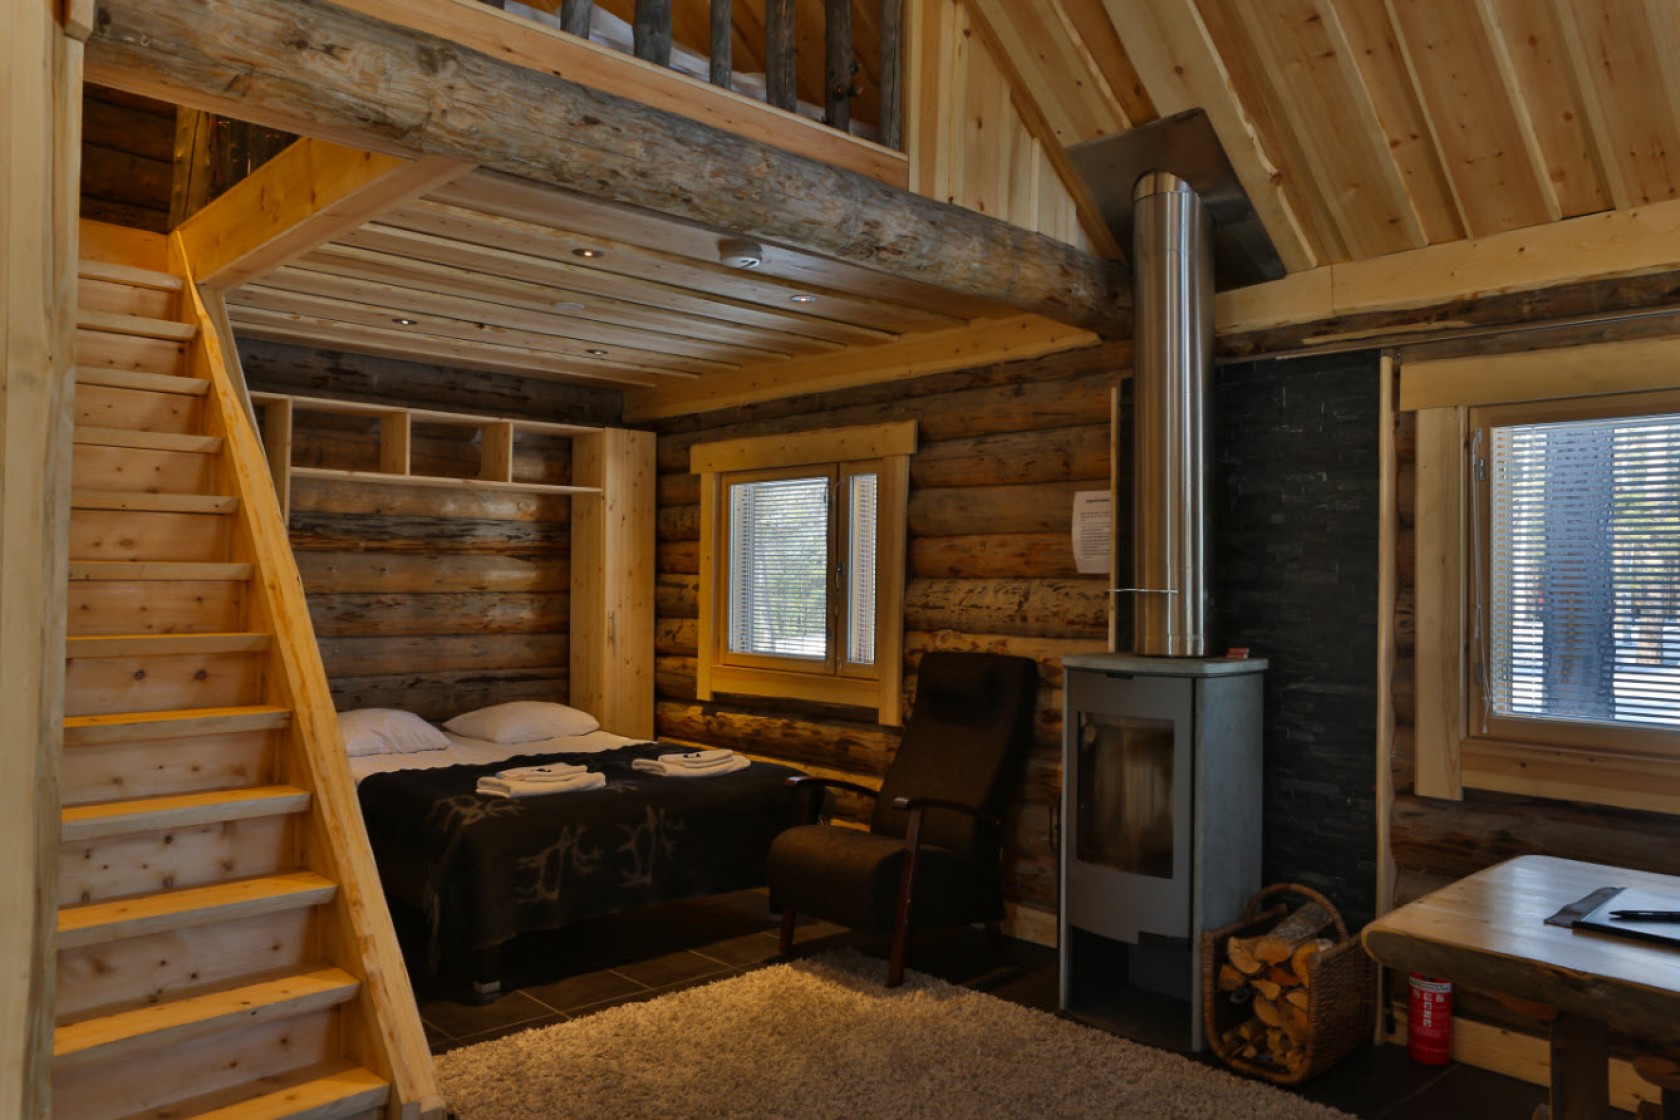 Nellim Log Cabins